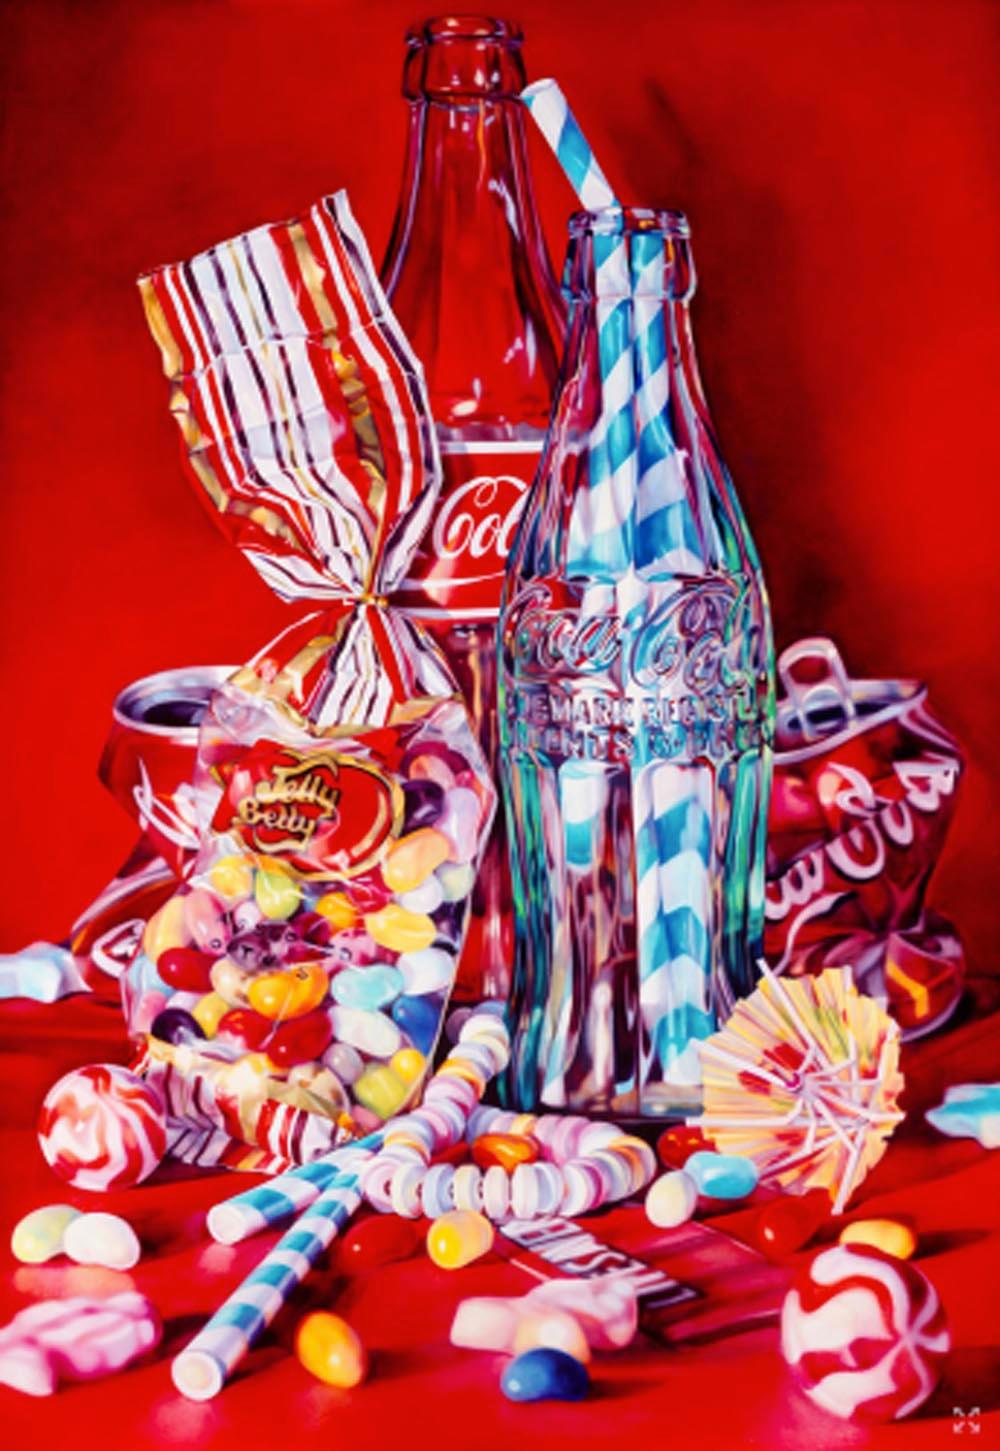 Kate Brinkworth Print - Coke, Jelly Beans and Lifesavers, still life pop art screen print